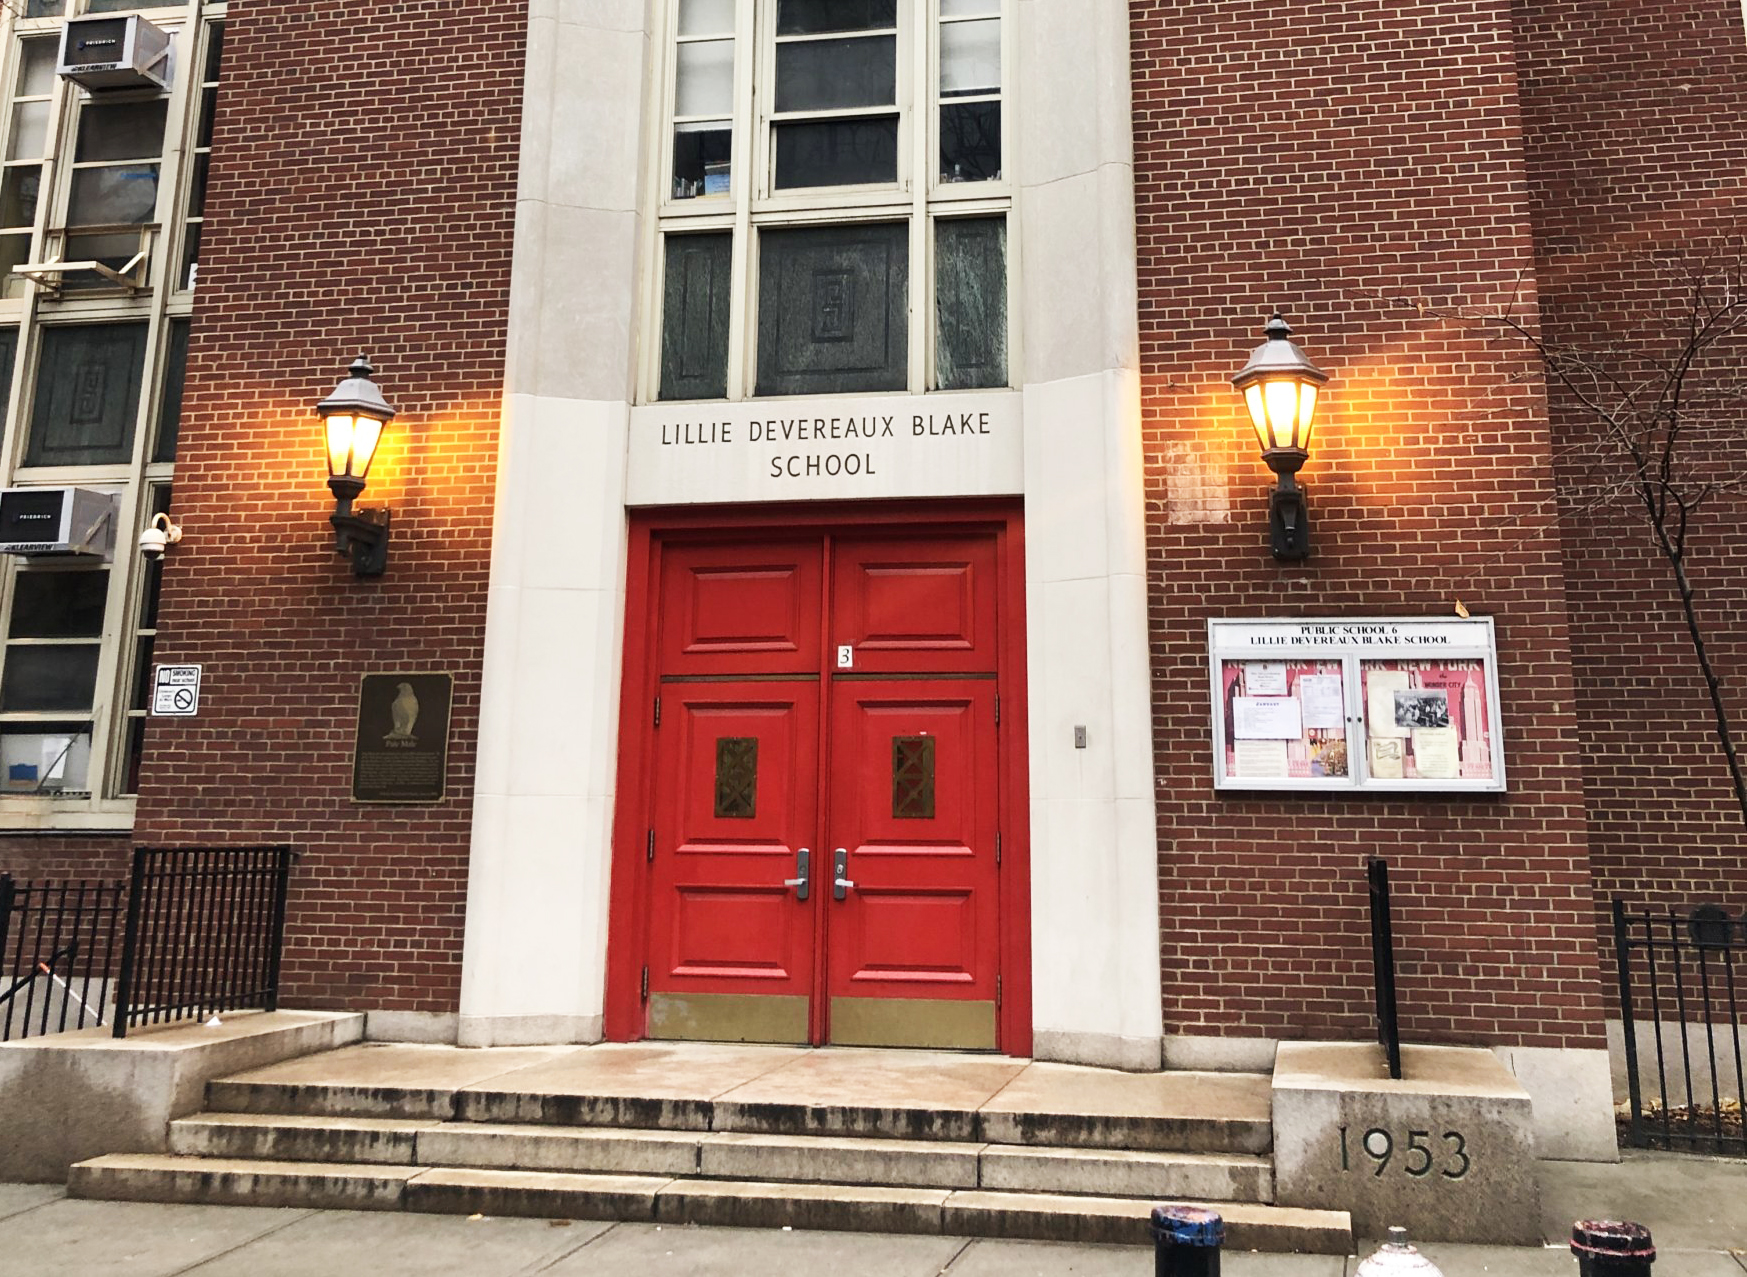 Ataturk Okulu New York P.S. 6 Lillie D. Blake School'da egitim vermektedir